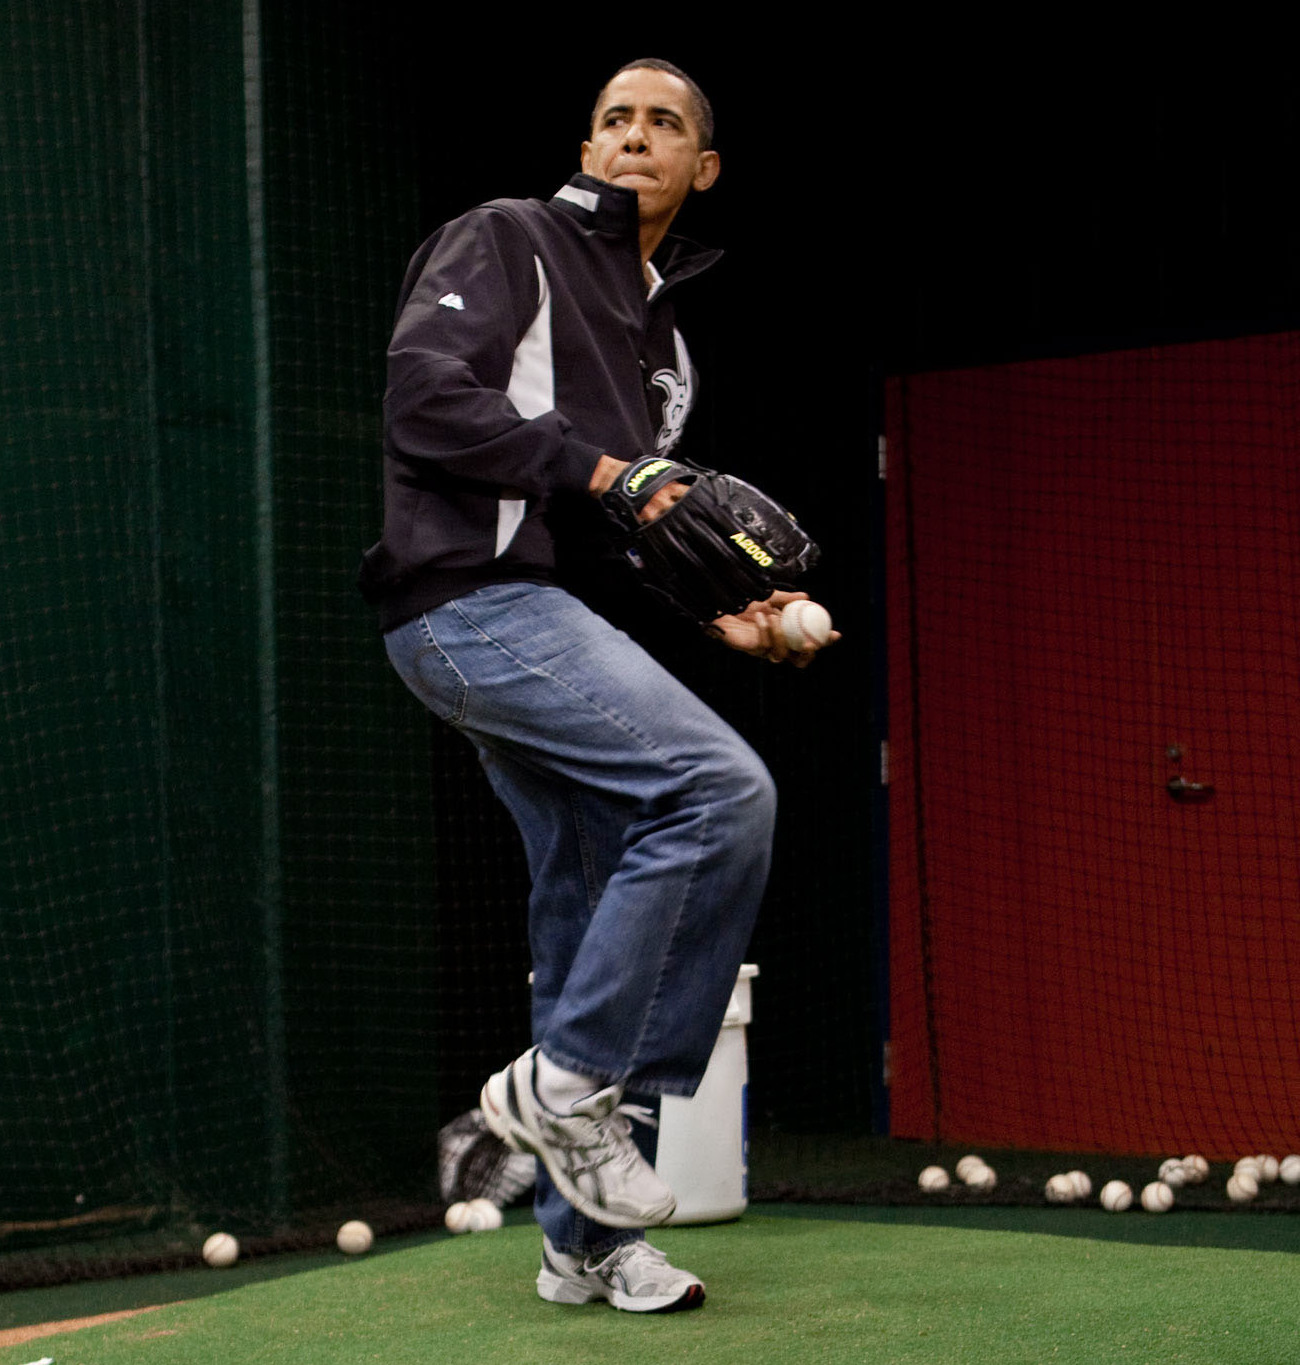 File:Barack Obama practises baseball (cropped).jpg -